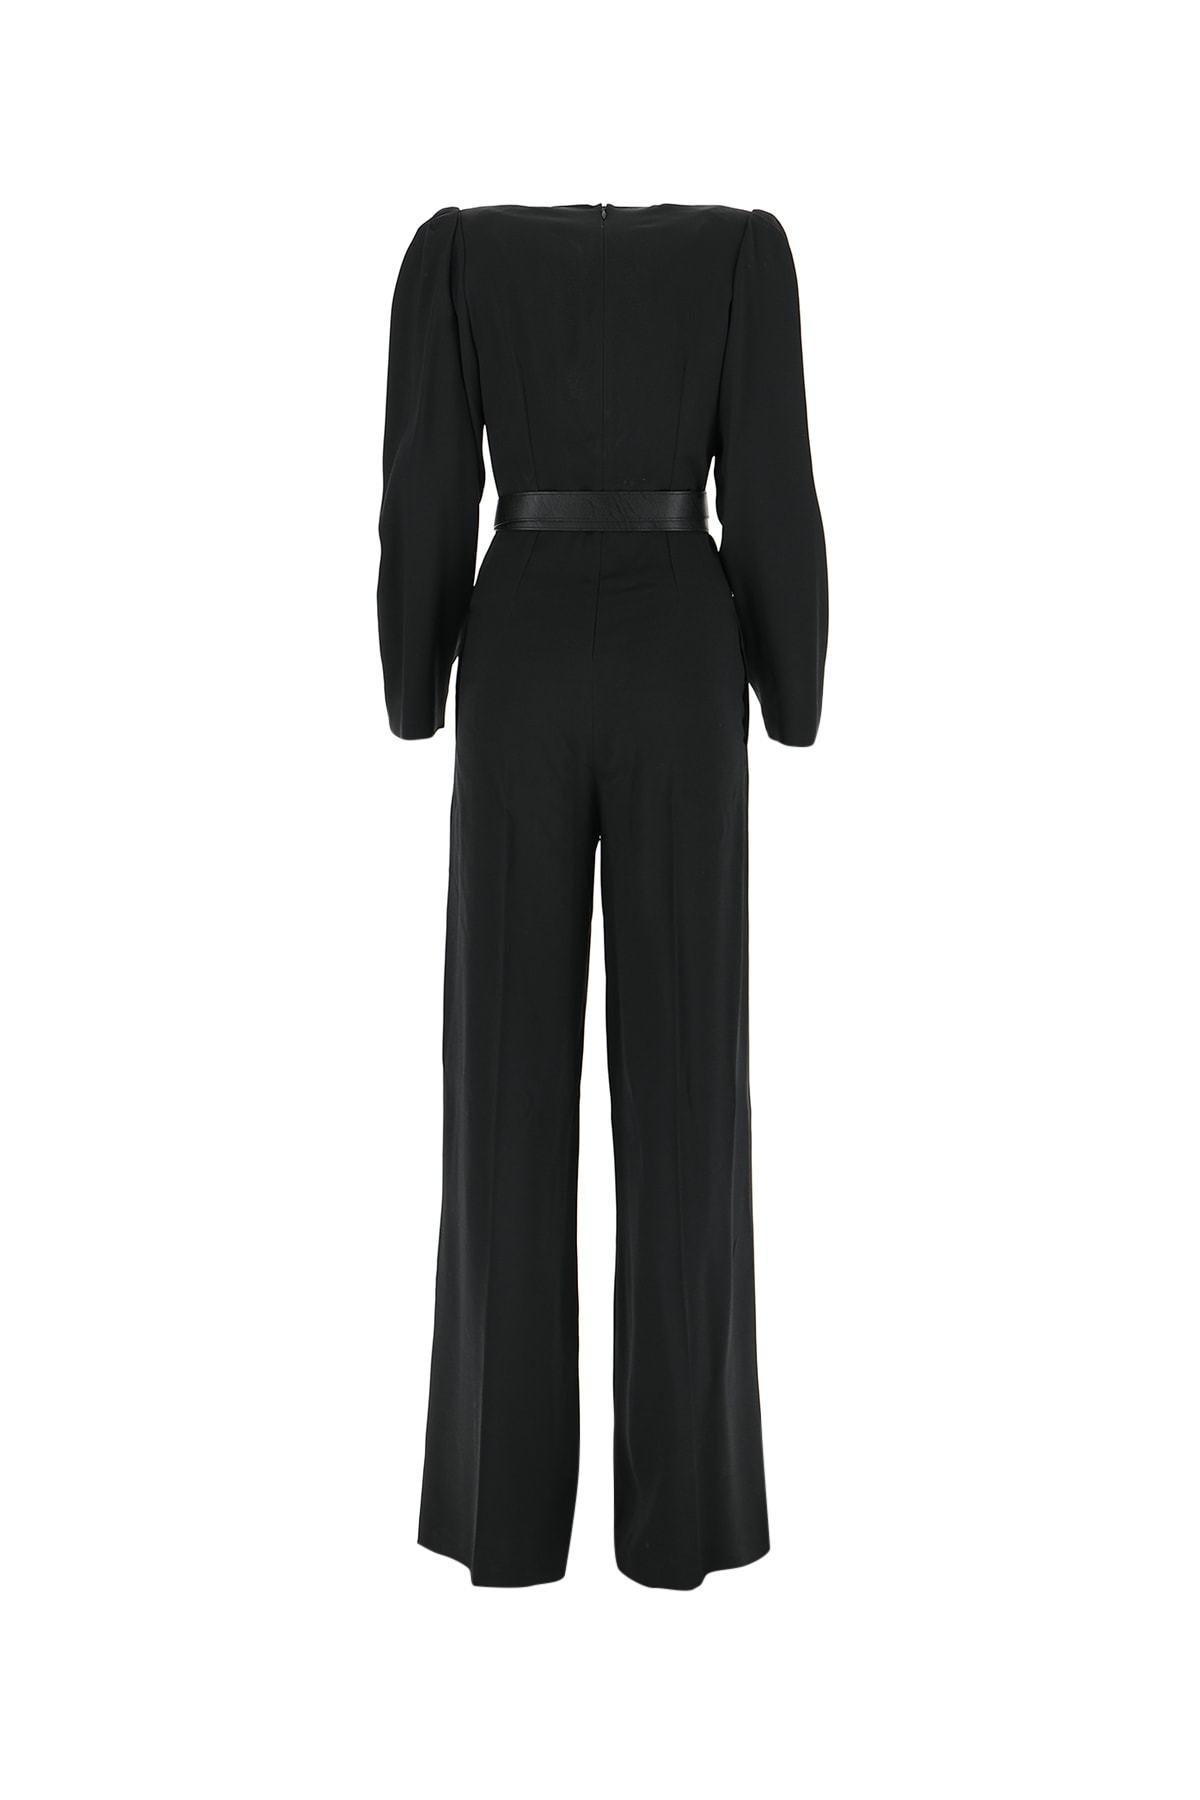 Stella McCartney Synthetic Deep V-neck Jumpsuit in Black - Lyst